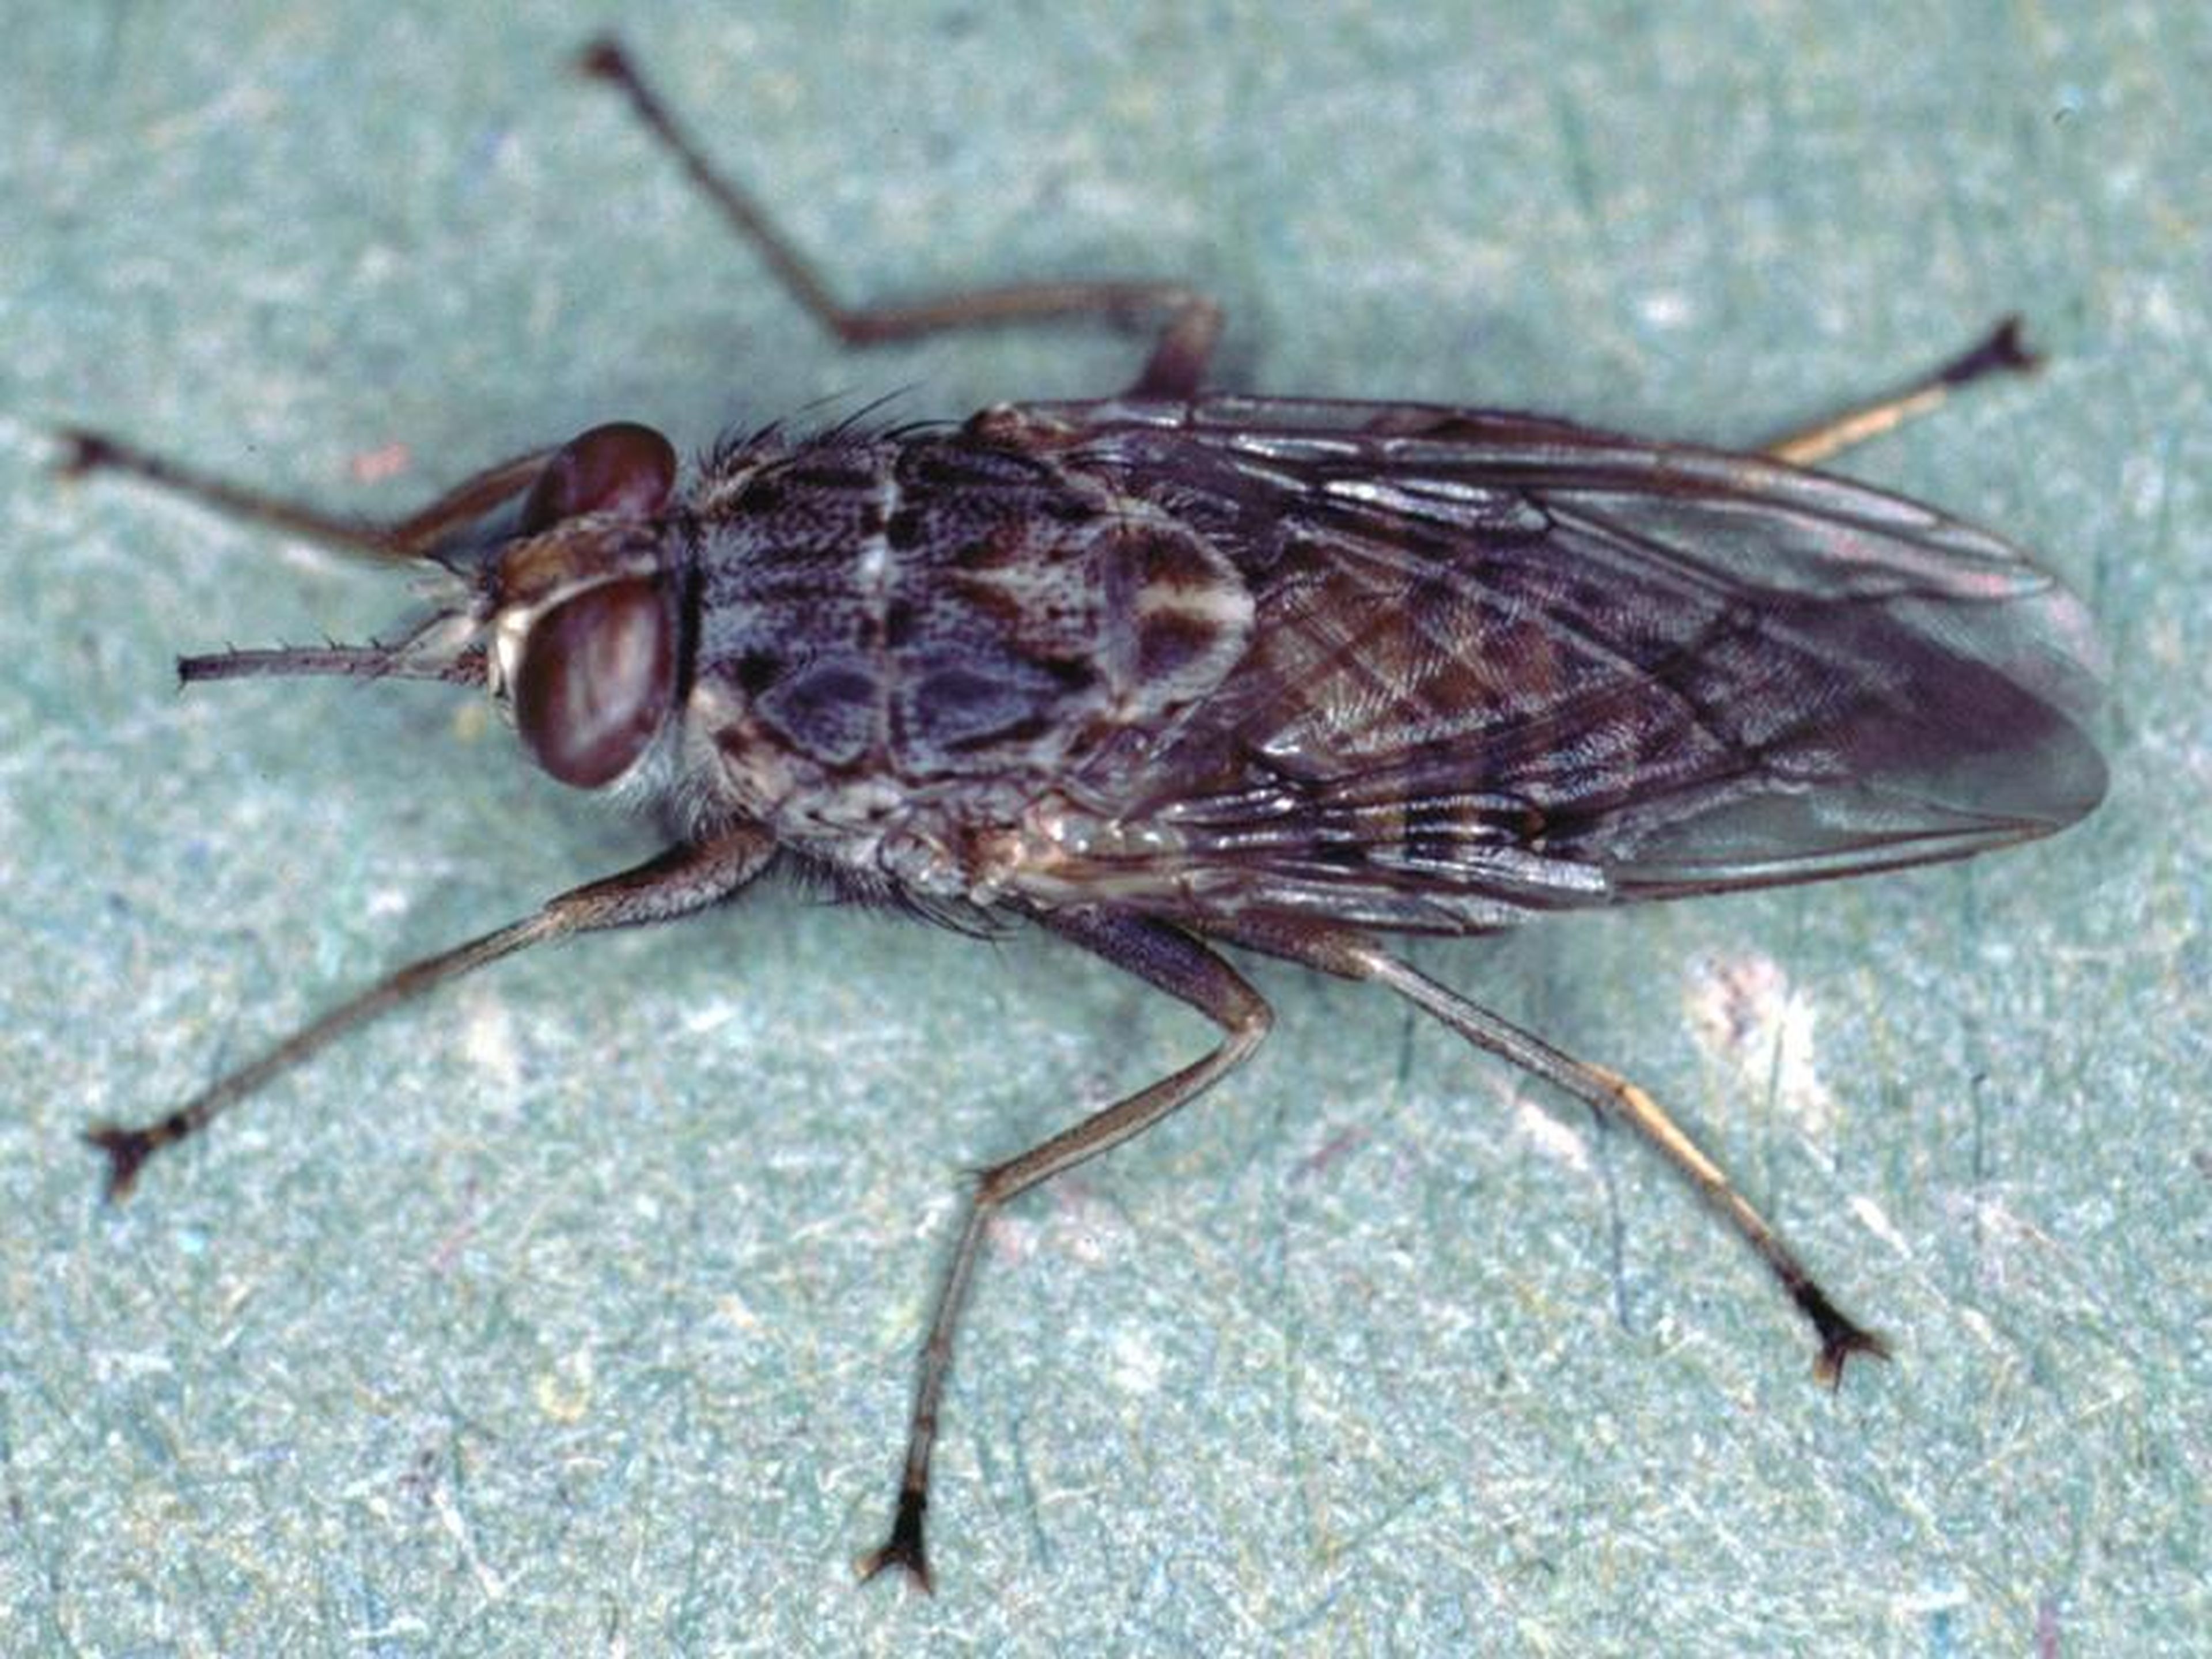 Tsetse flies spread African sleeping sickness to humans and animals.